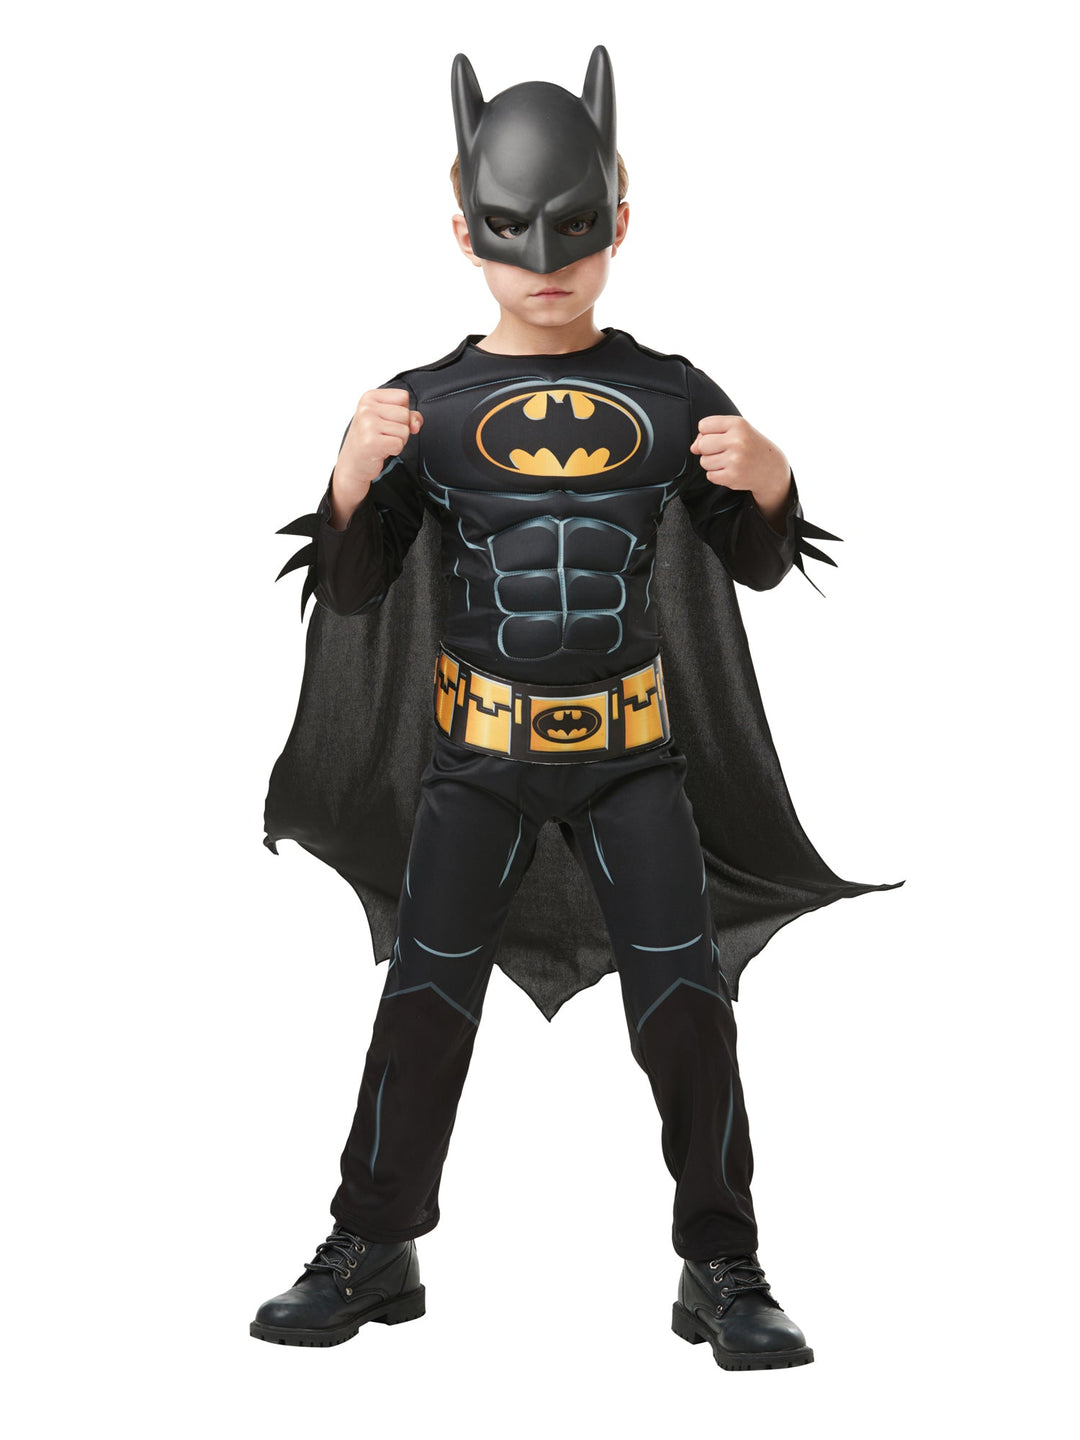 Micheal Keaton Batman Costume for Kids